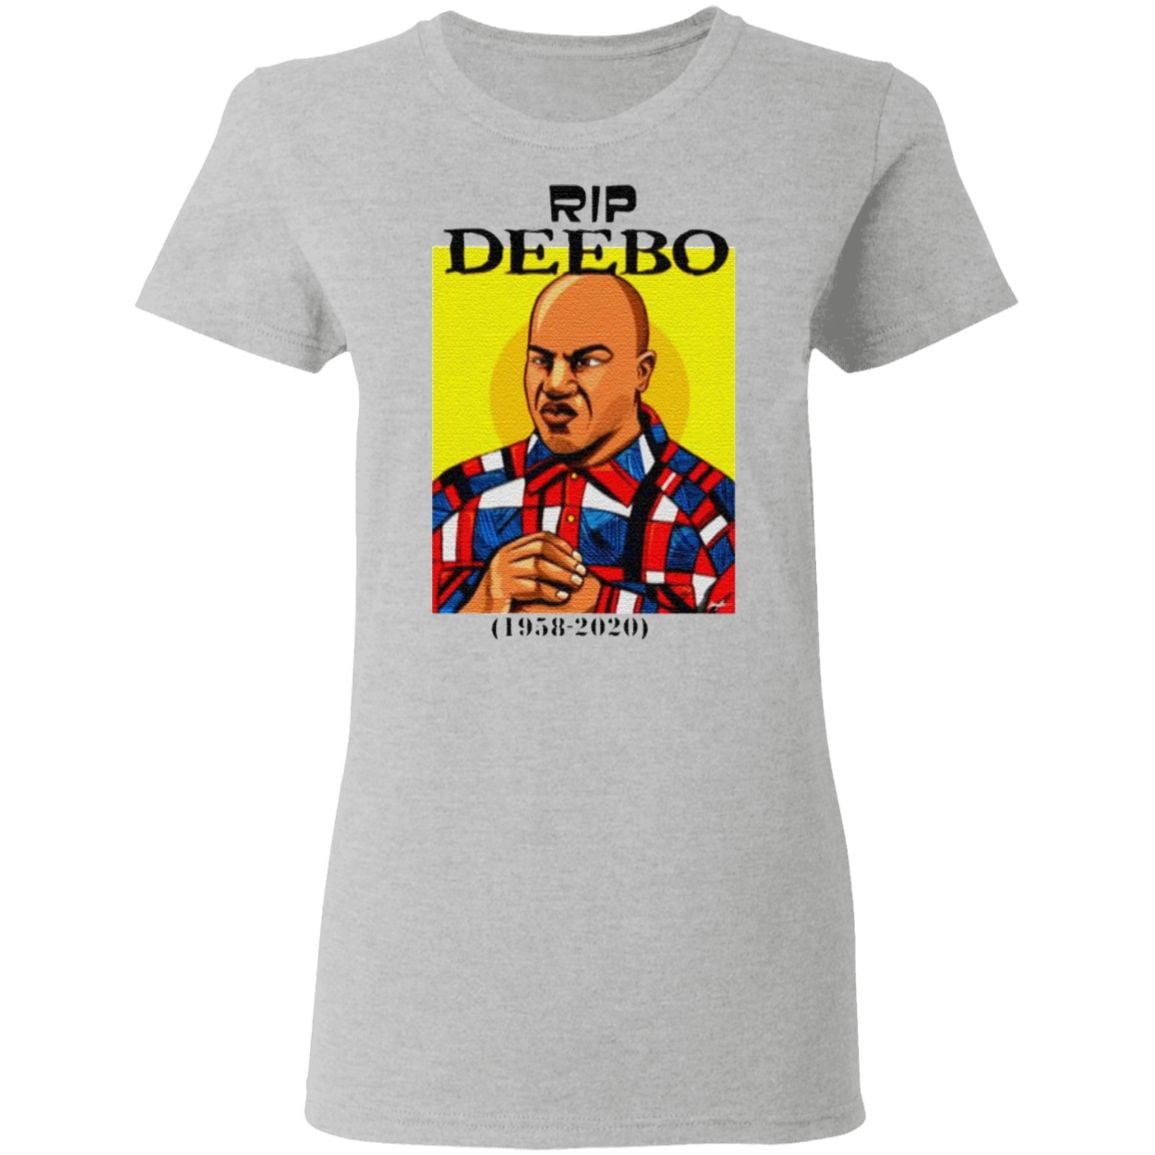 Rip Deebo 1958 2020 t shirt